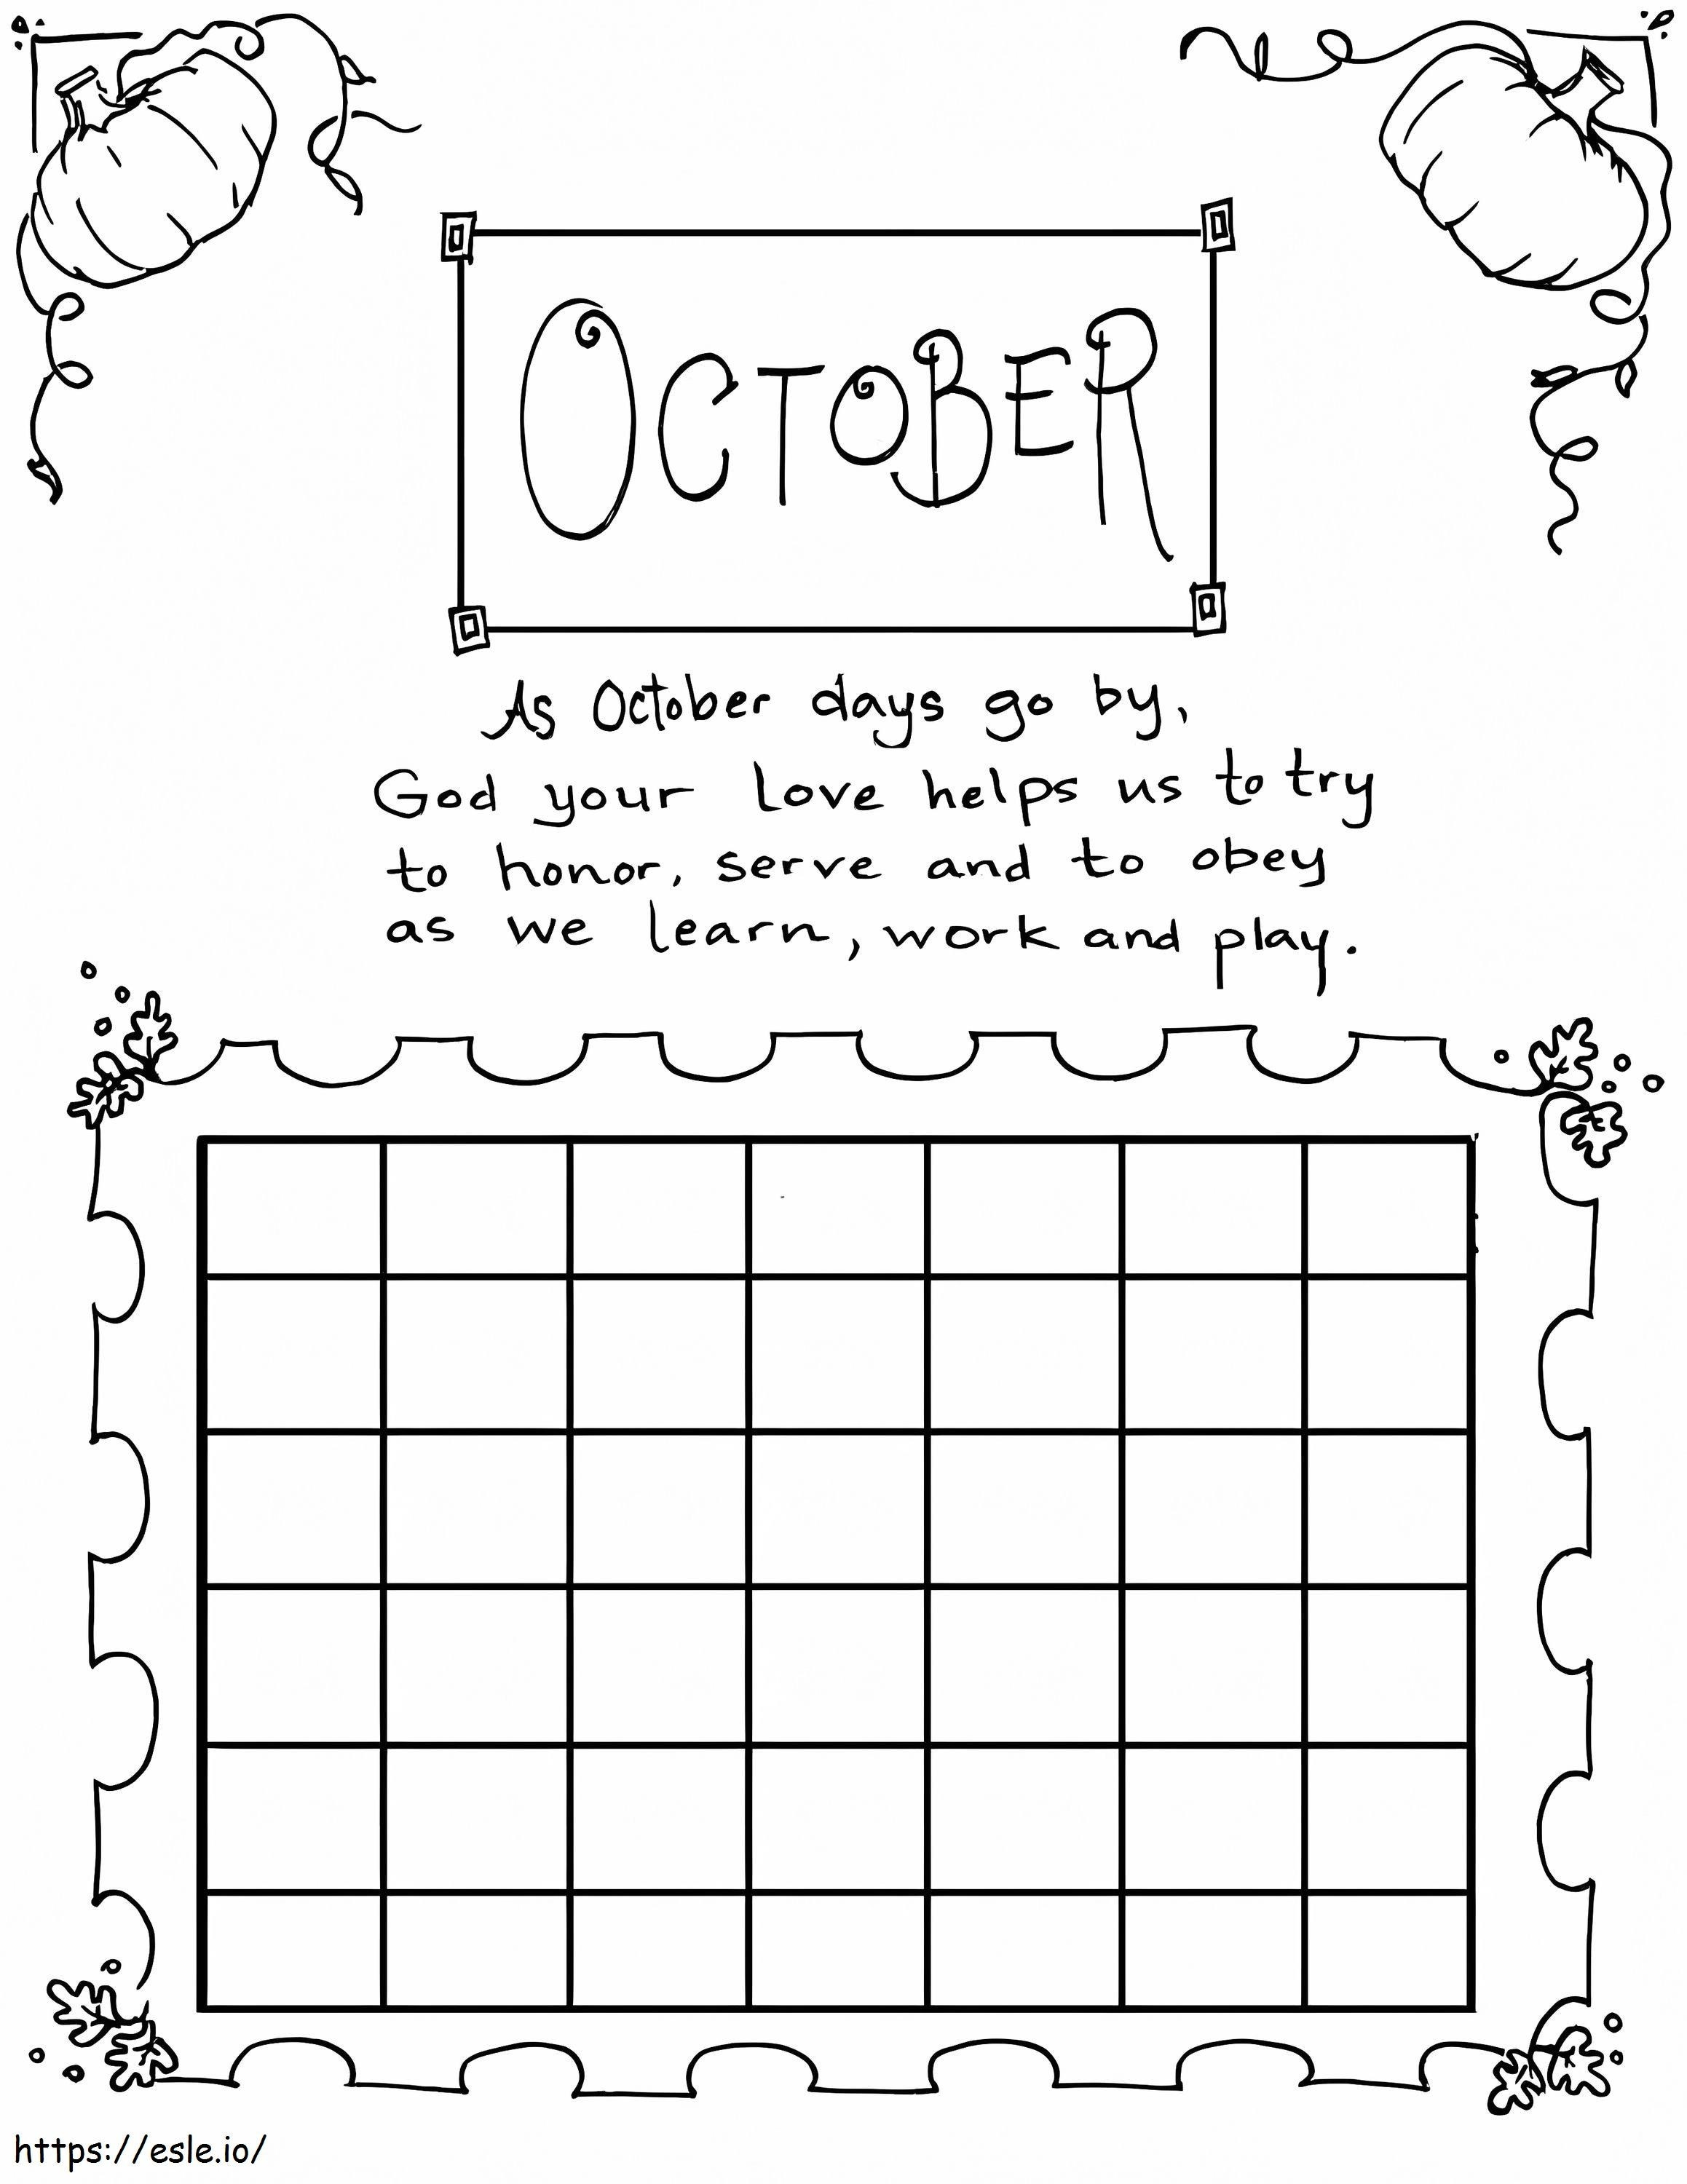 Oktoberkalender ausmalbilder